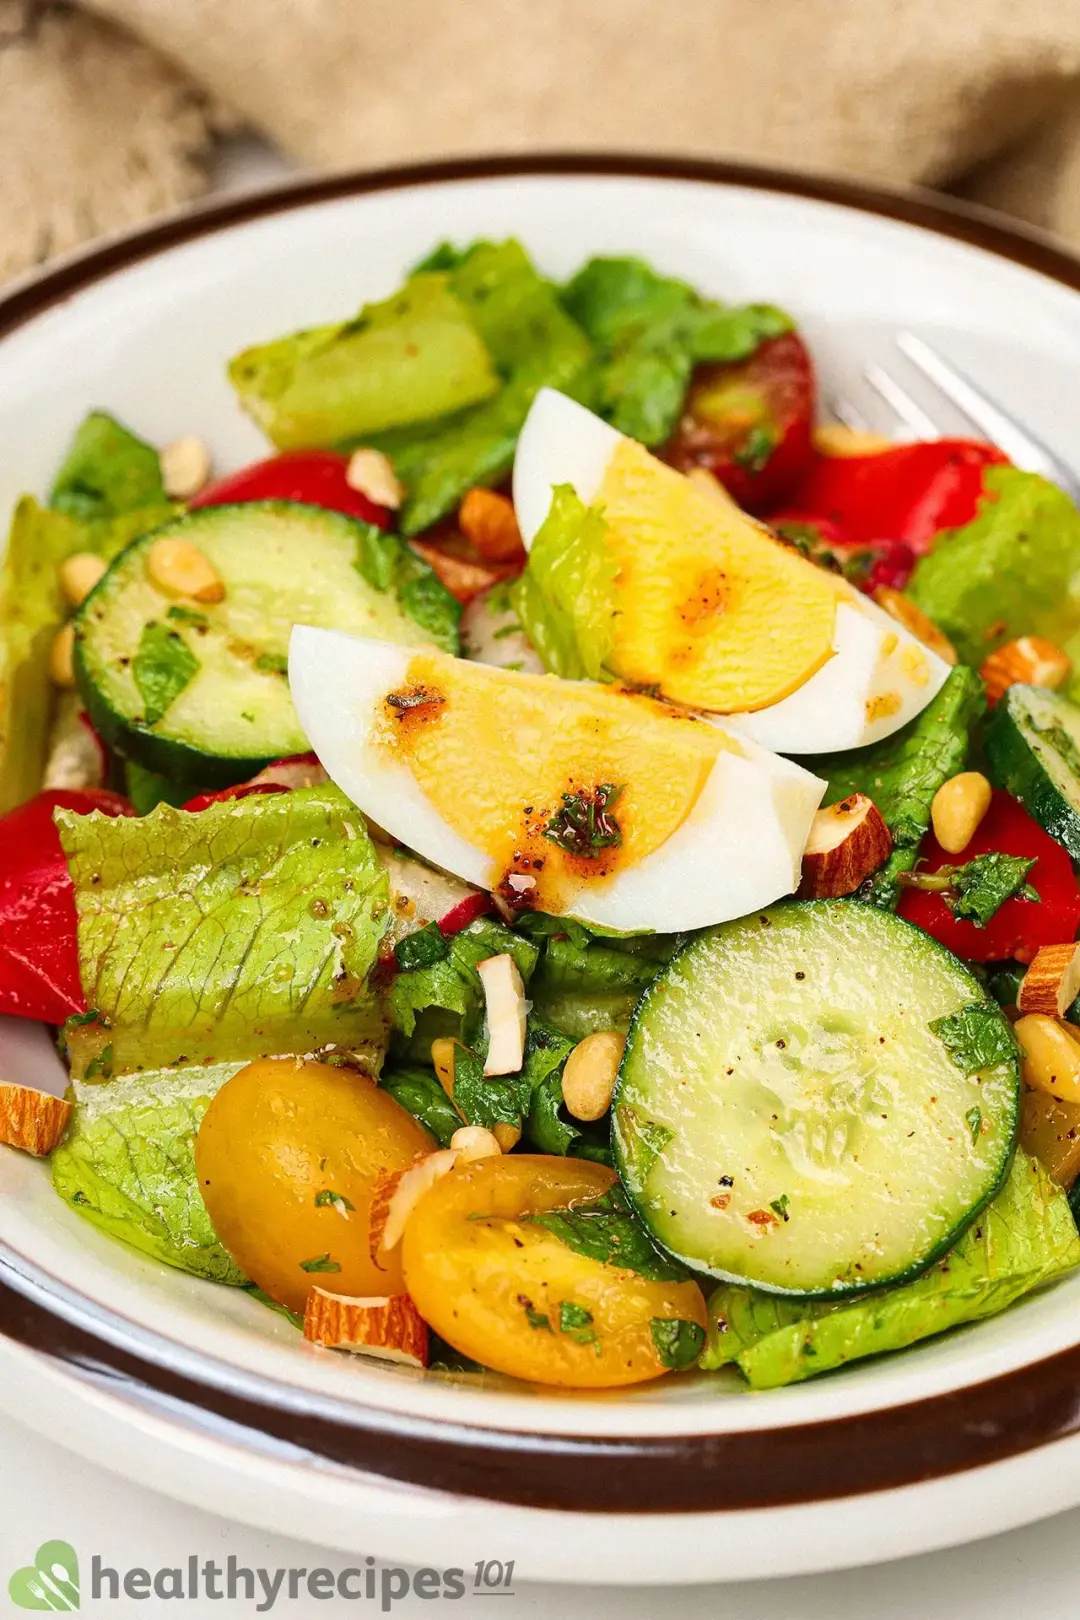 Is Romaine Salad Healthy